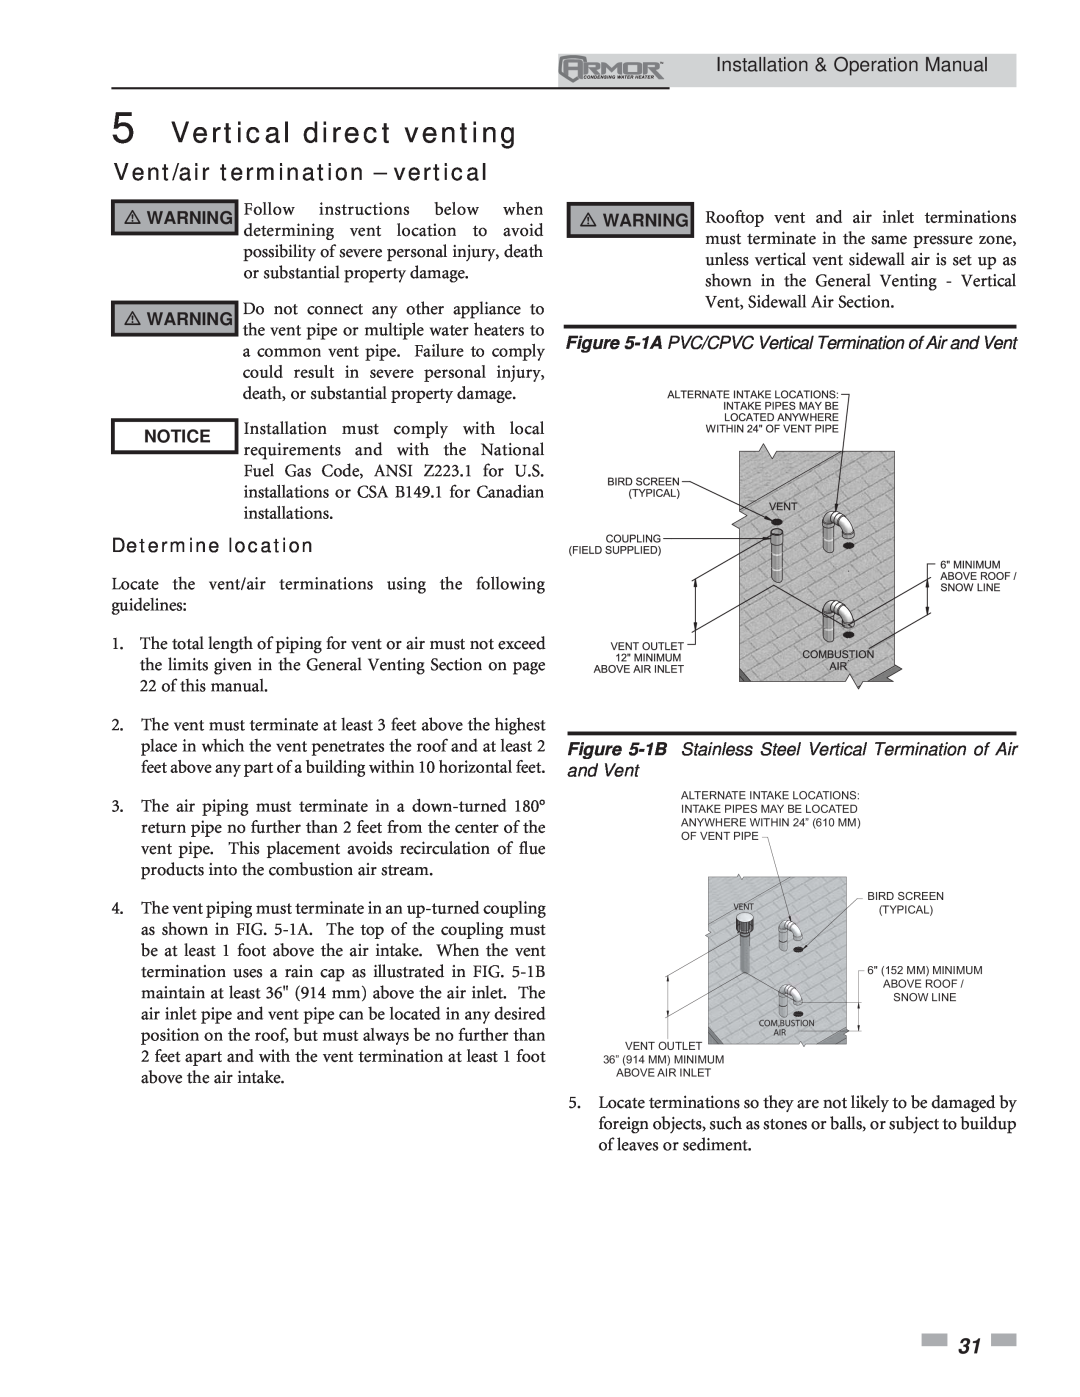 Lochinvar 151 operation manual Vertical direct venting, Vent/air termination – vertical, Determine location, Notice 